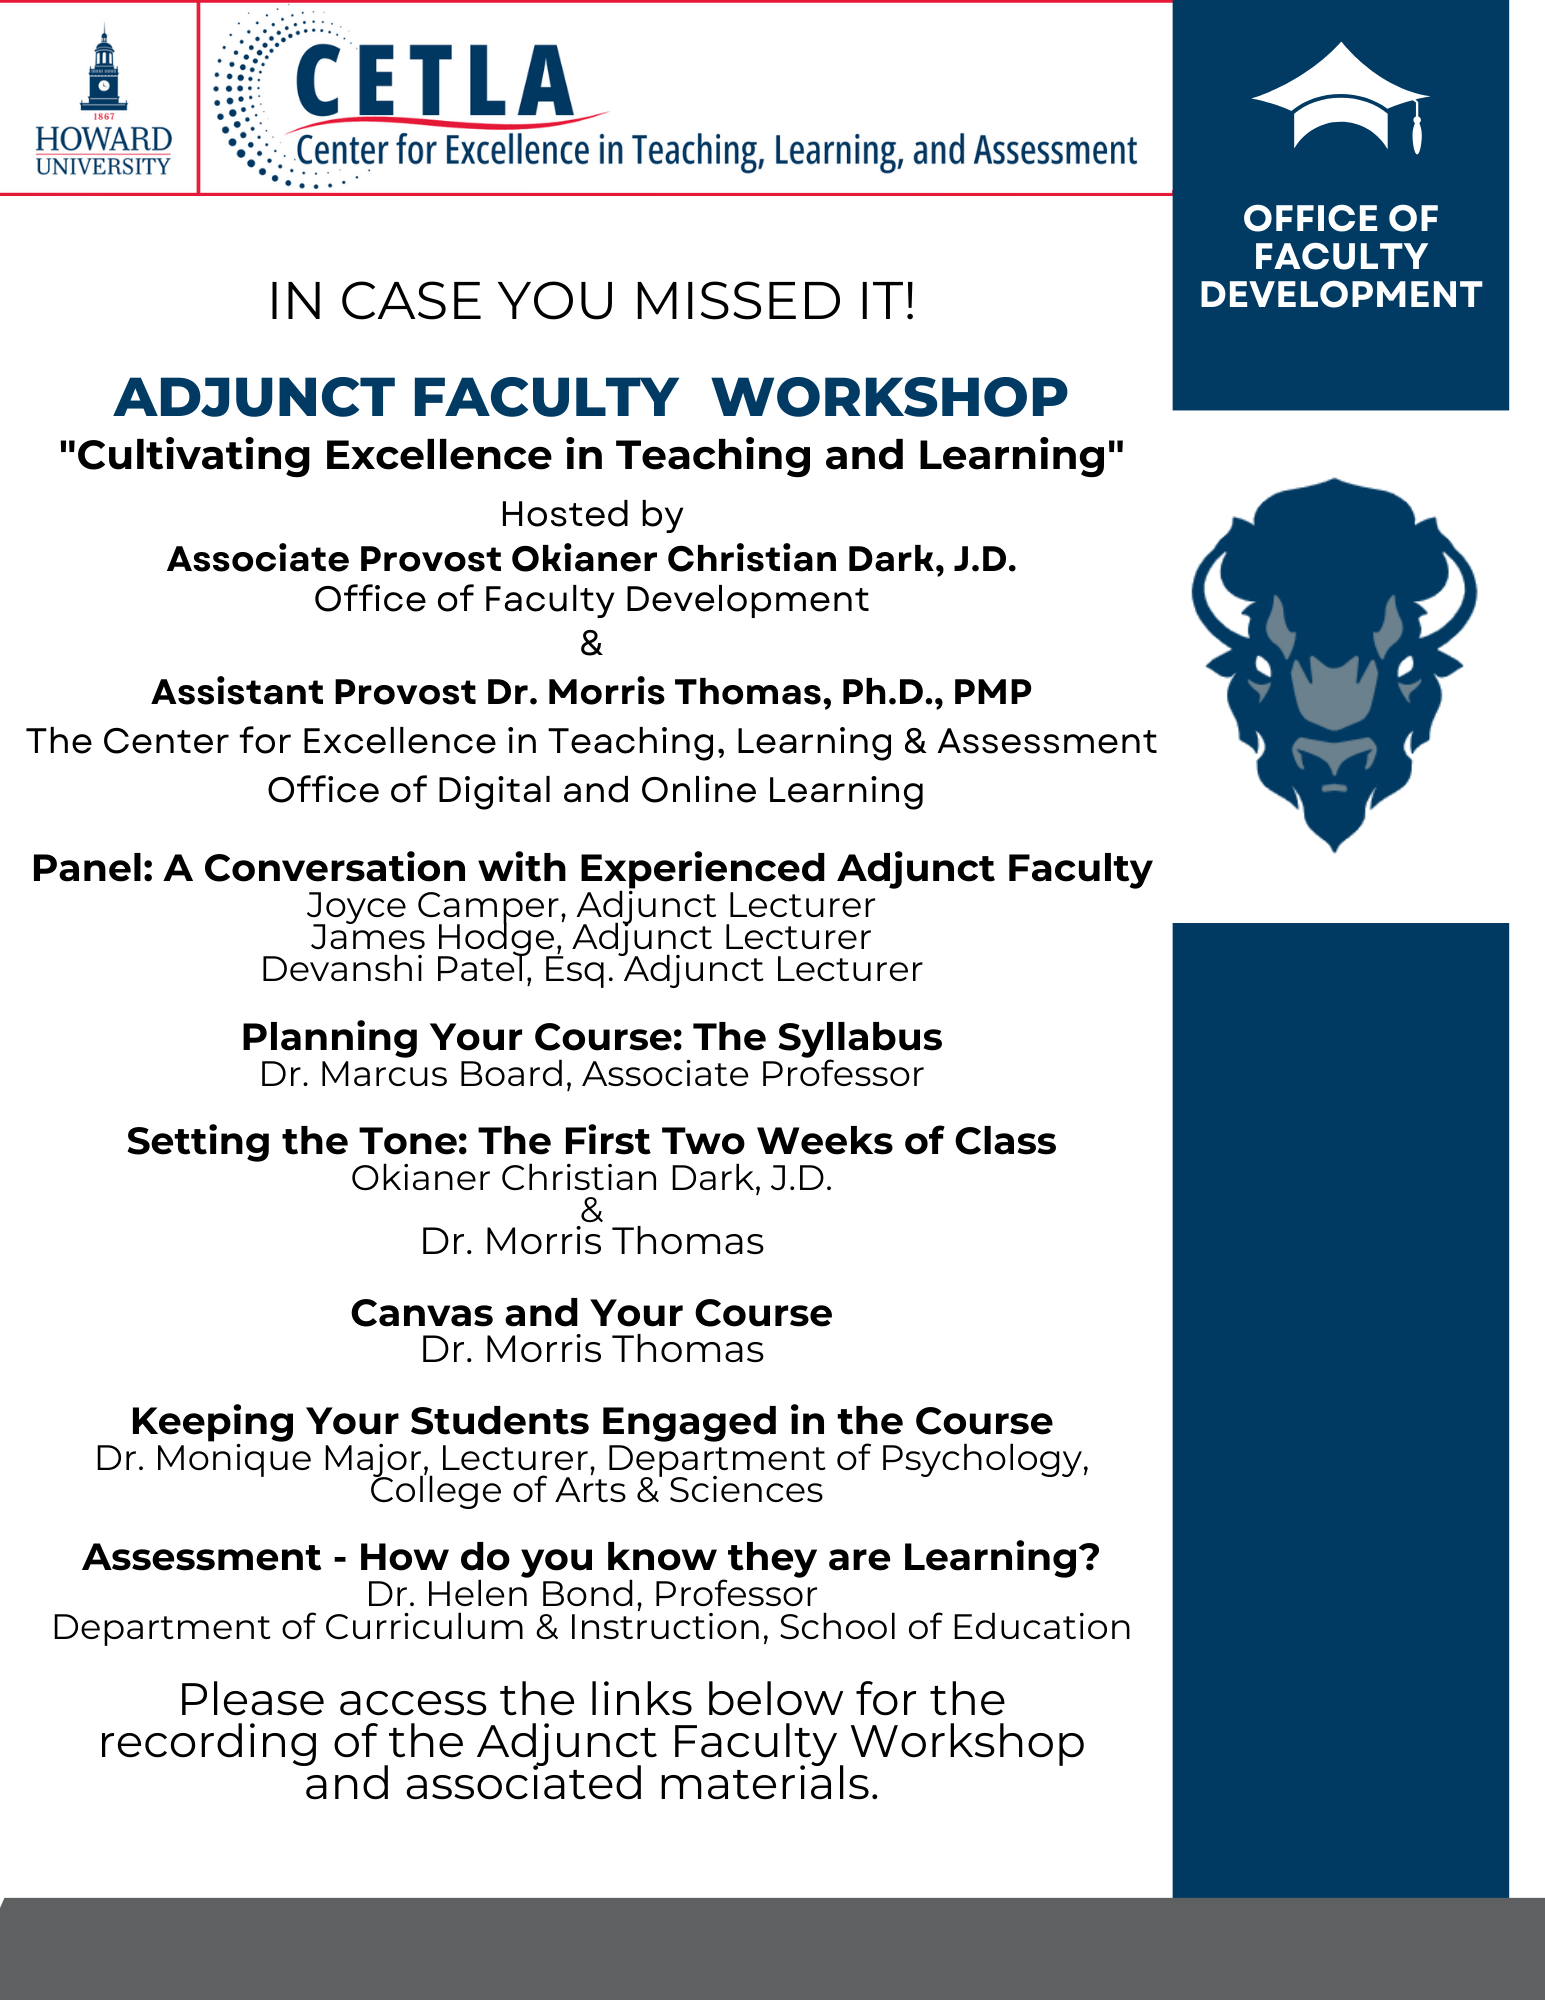 Adjunct Faculty Workshop Announcement